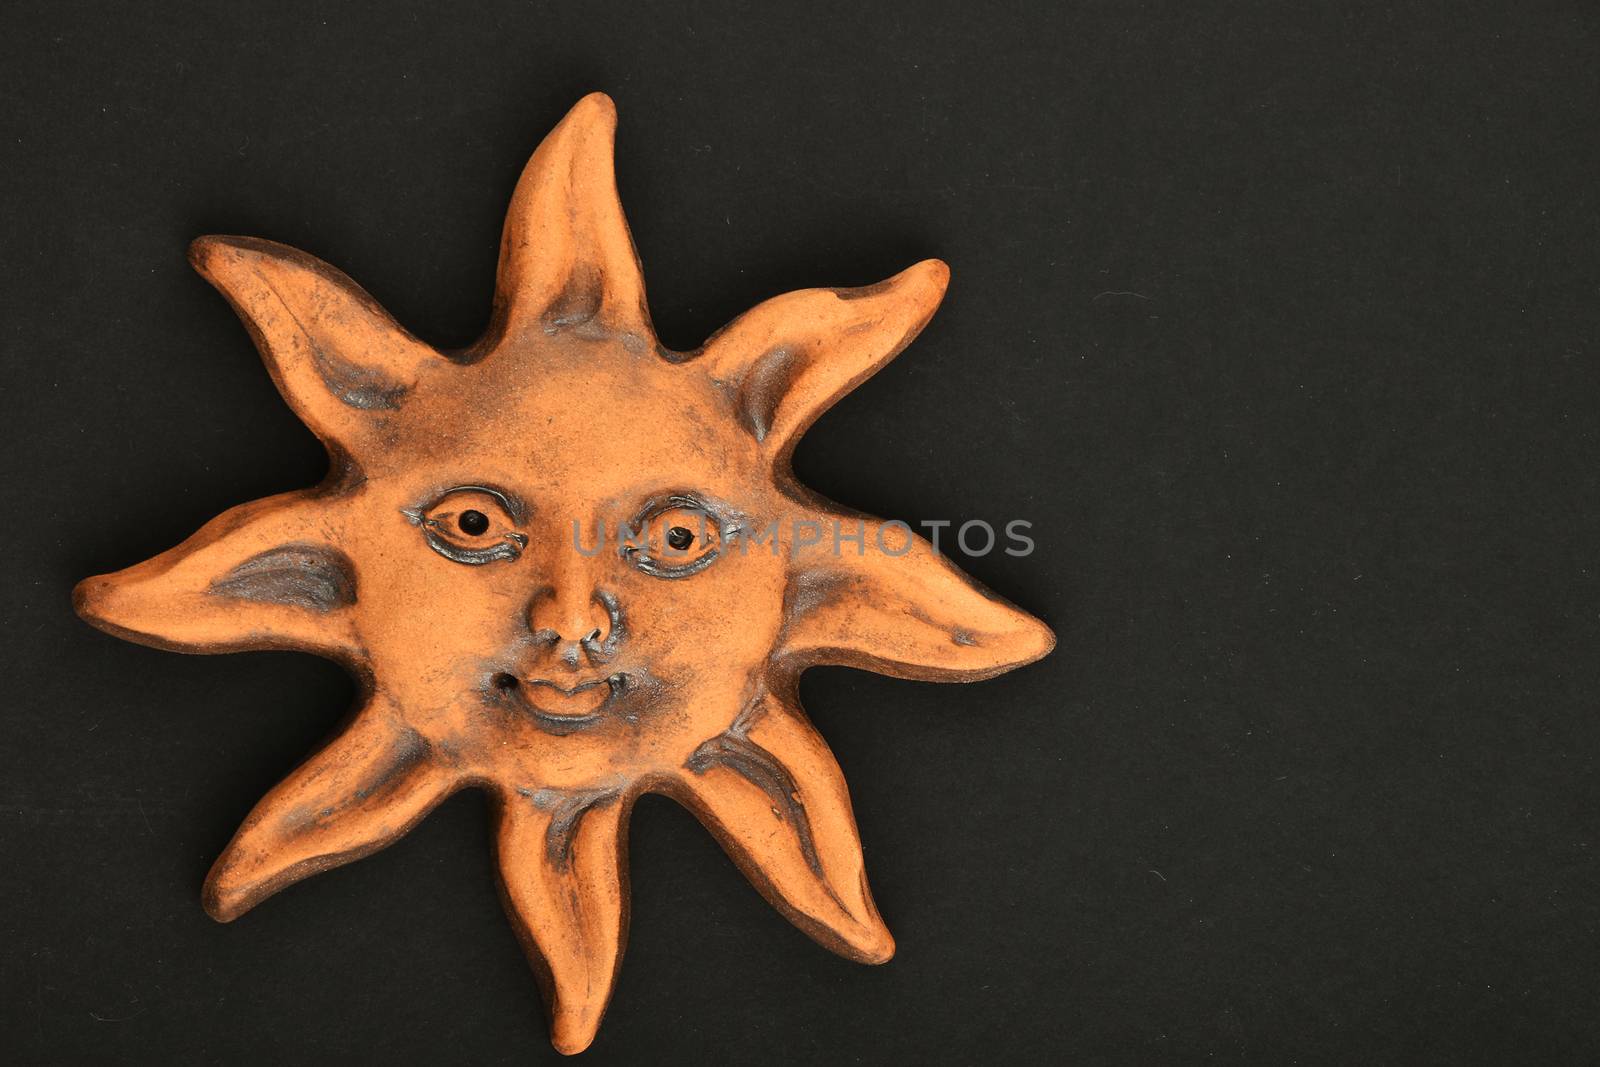 Smiling glazed ceramic sun happy face souvenir isolated on black